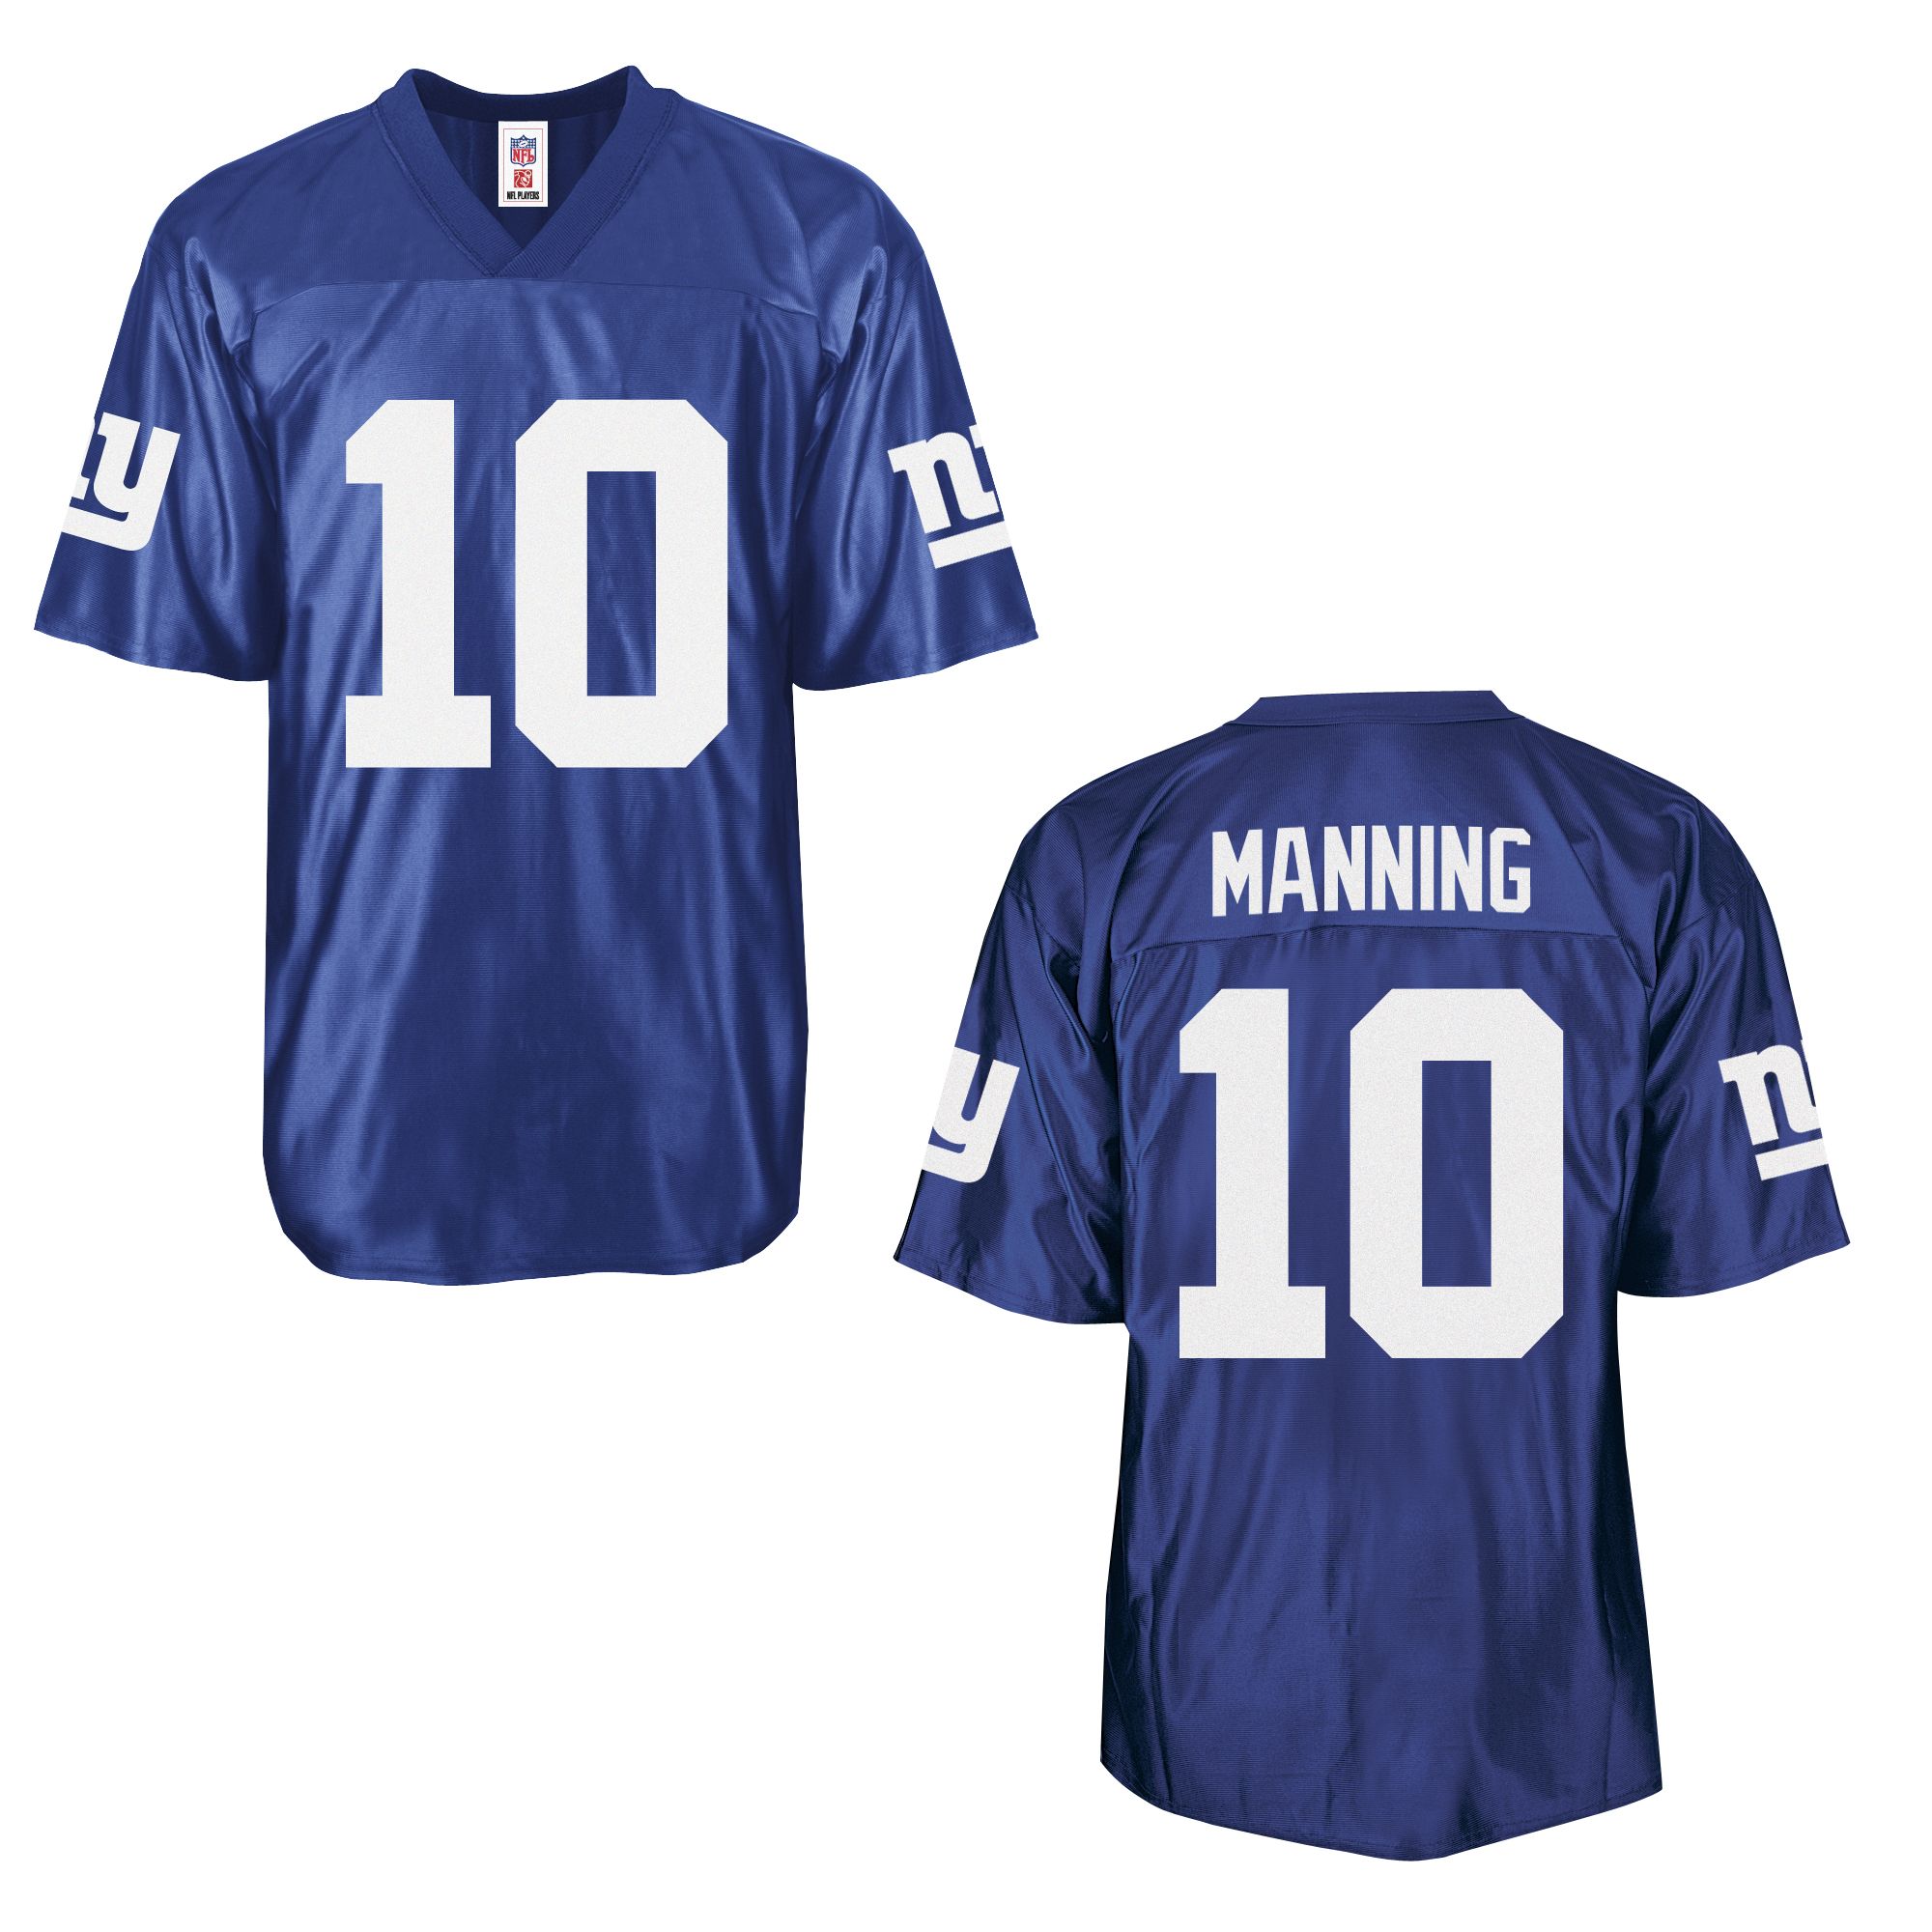 NFL Men's New York Giants Manning Jersey